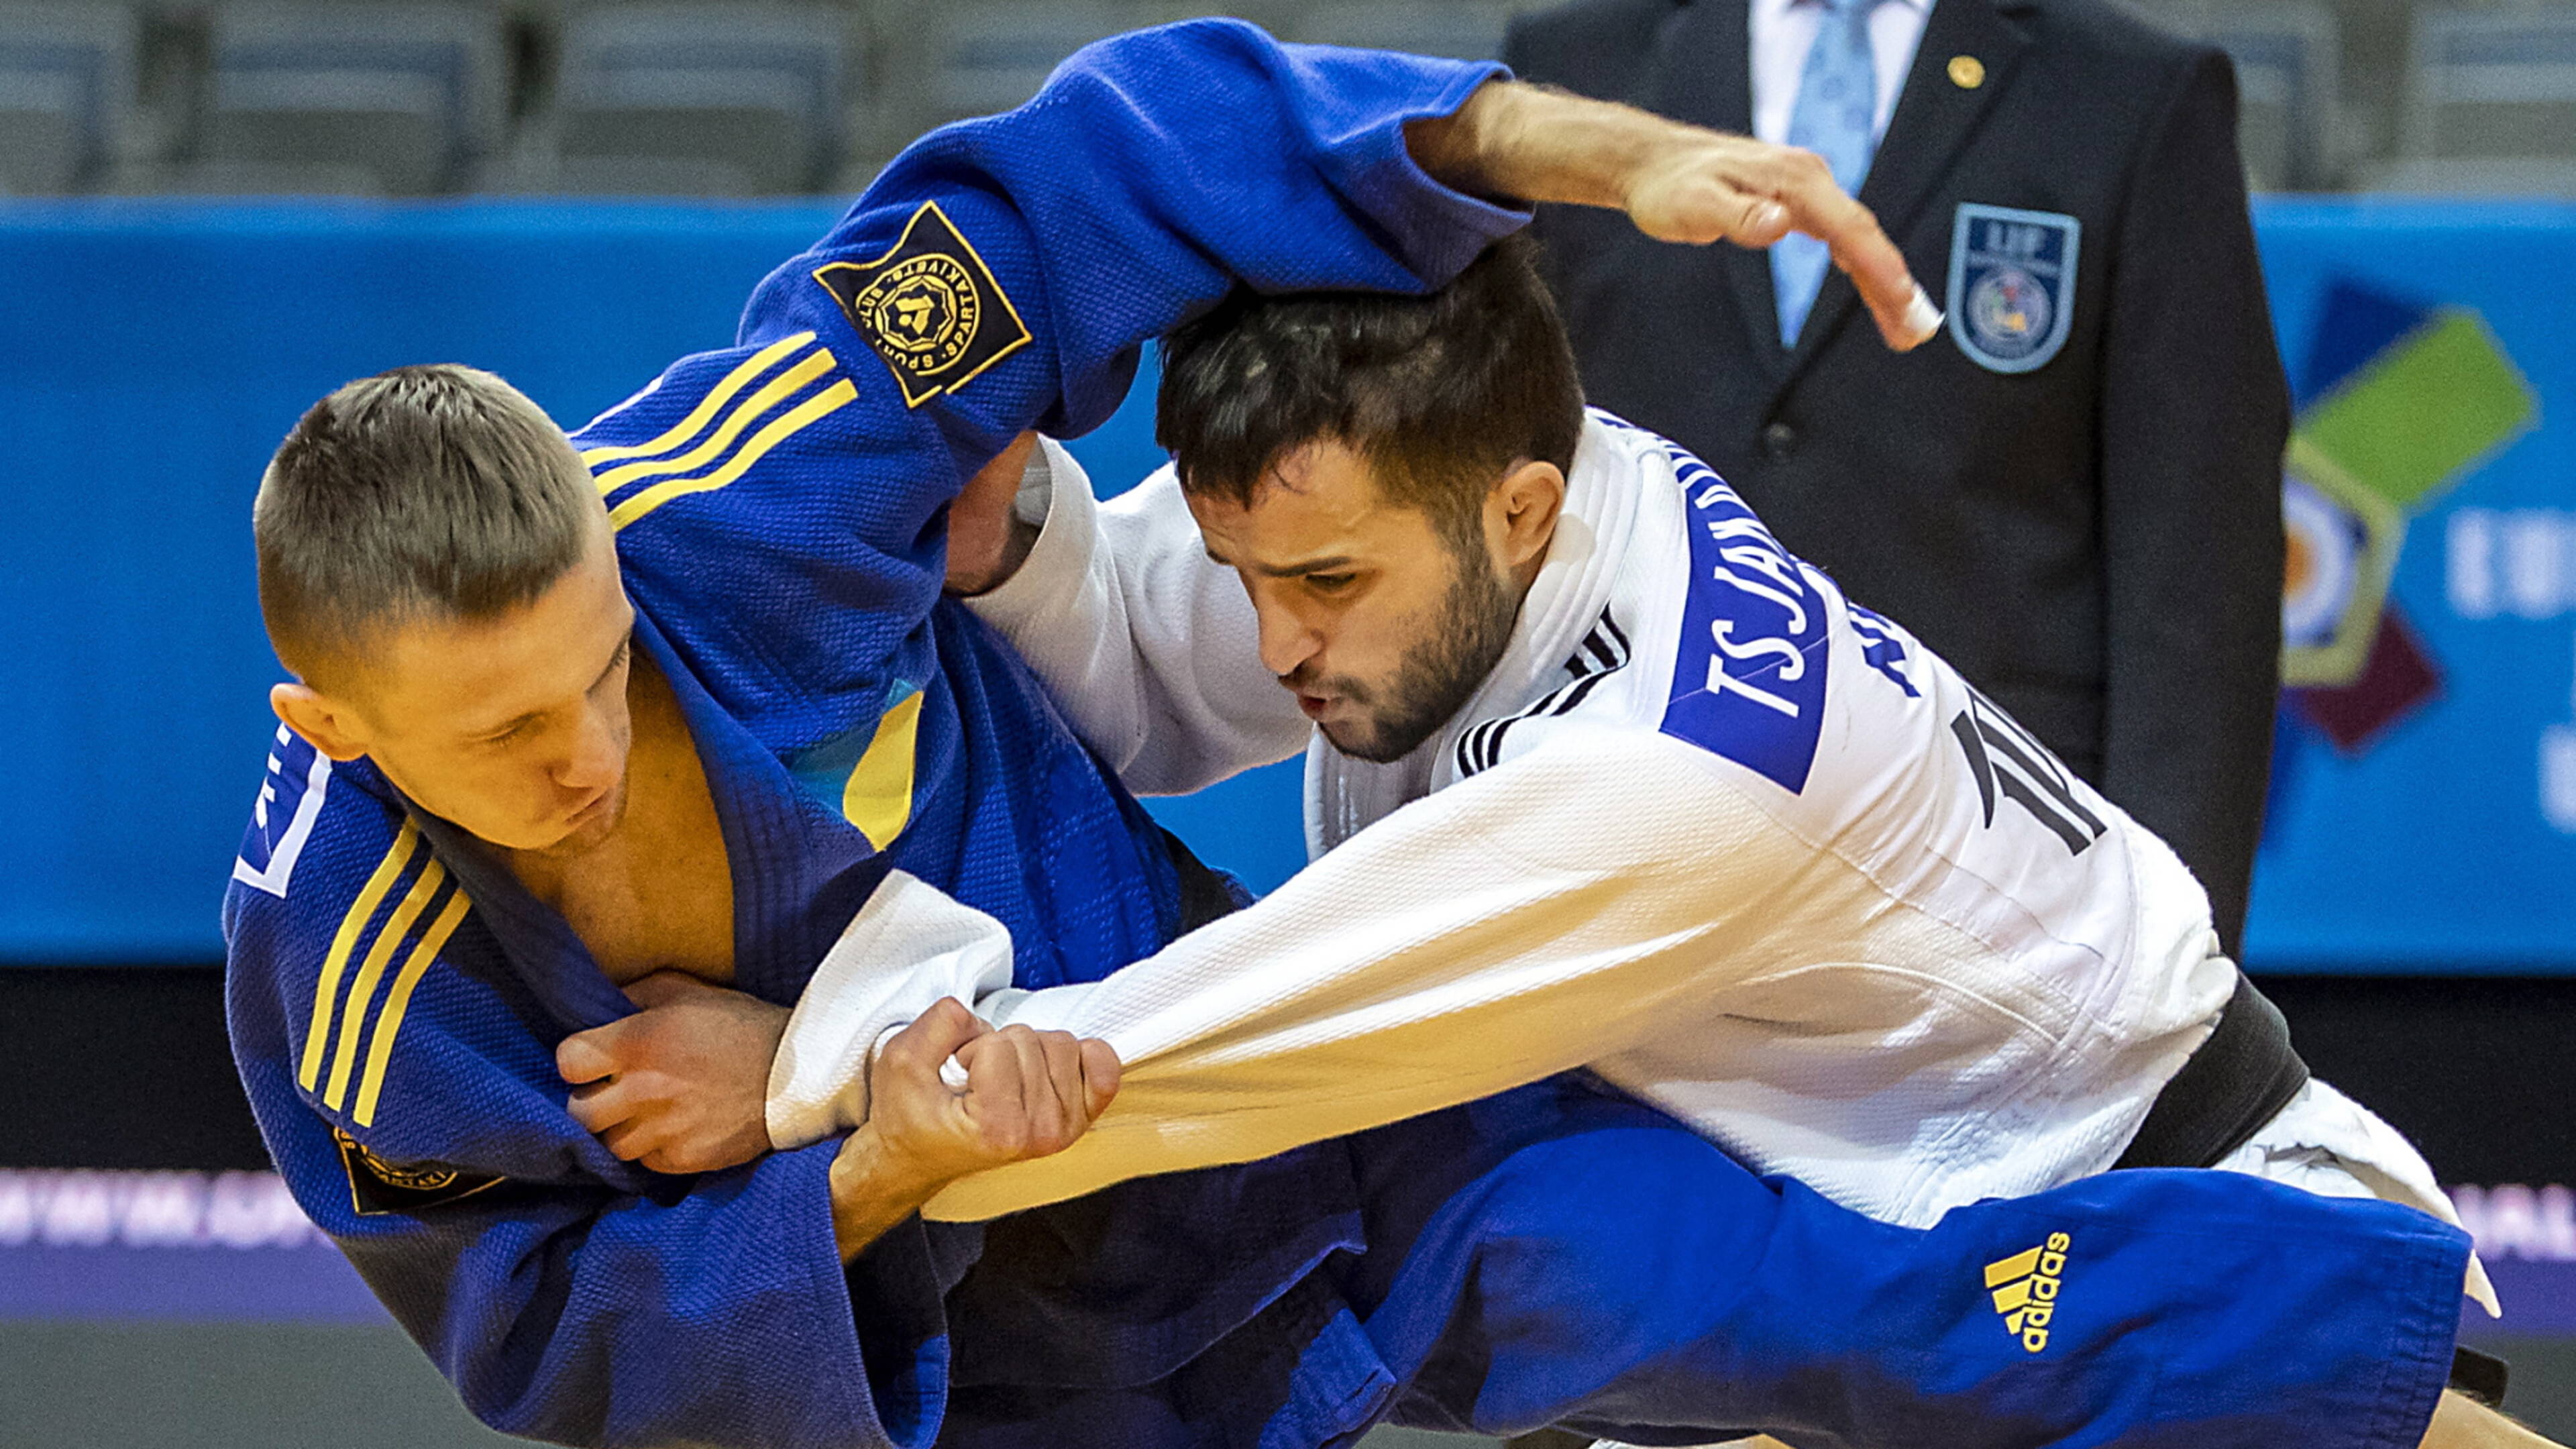 Judo: Tornike Tsjakadoea vs. Simeon Catharina, 2022 Judo Grand Slam Tbilisi, Competitive combat sports. 3840x2160 4K Wallpaper.